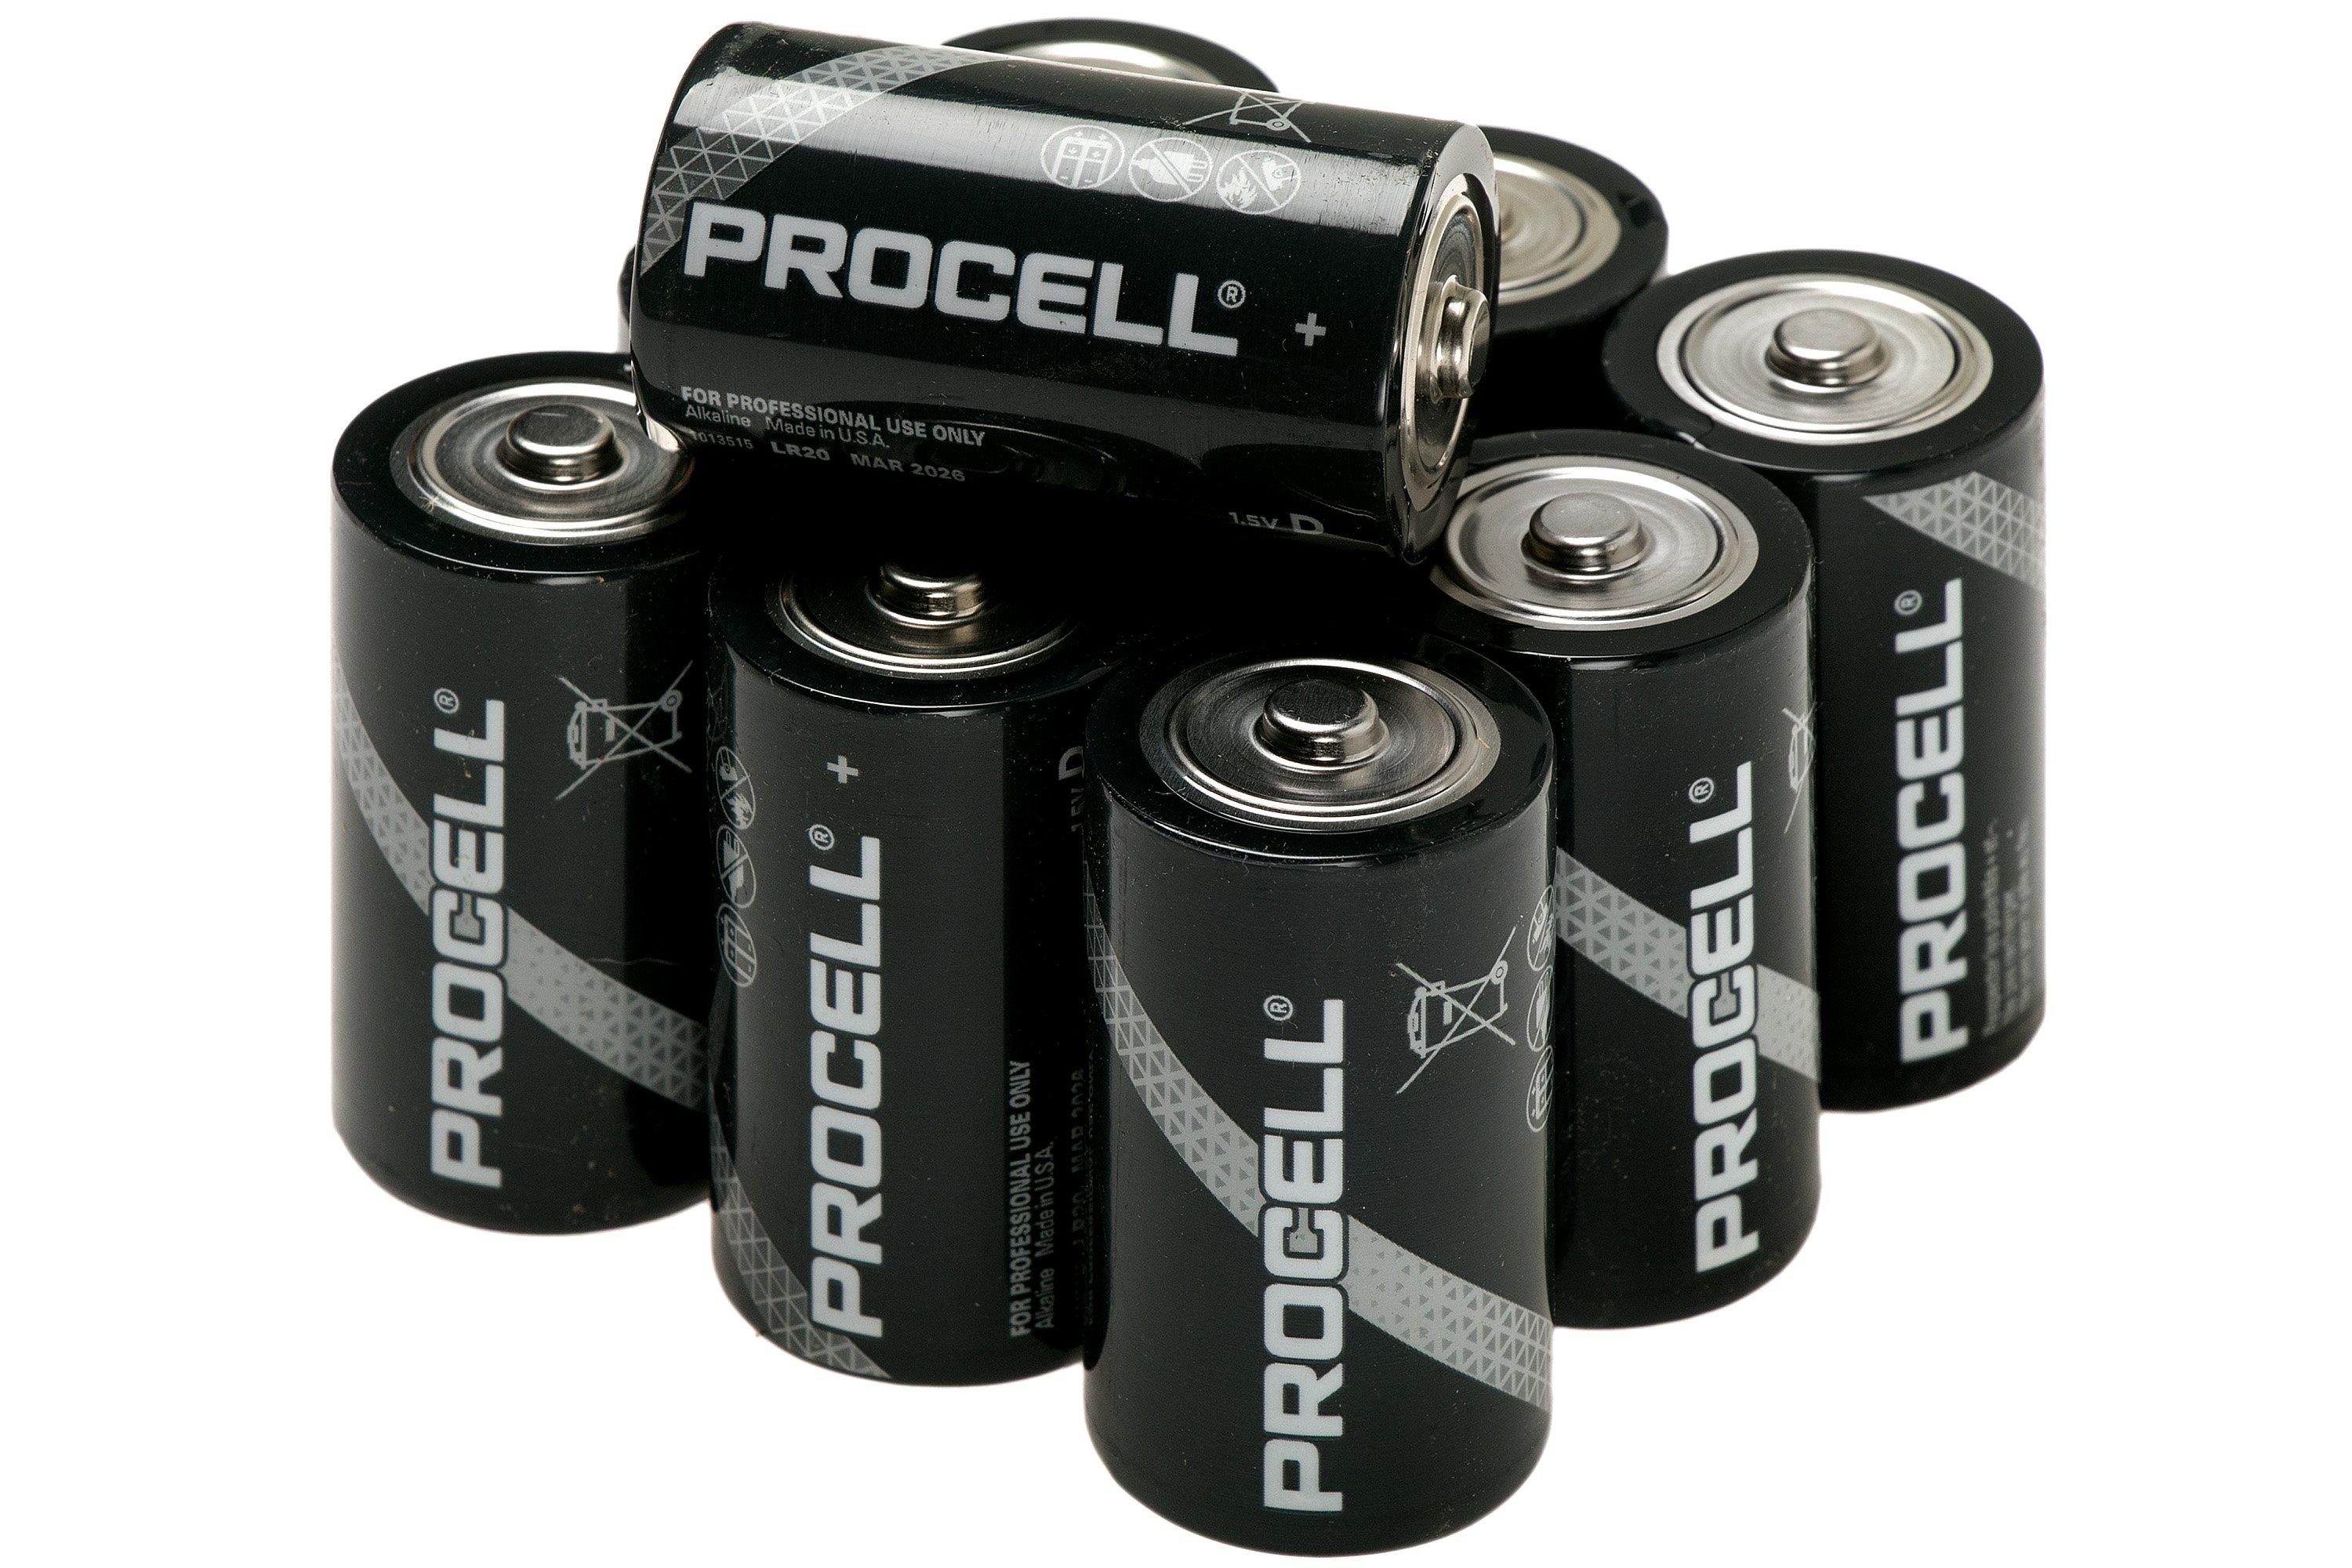 Duracell Procell D-alkaline batteries (LR20), 10 pieces .